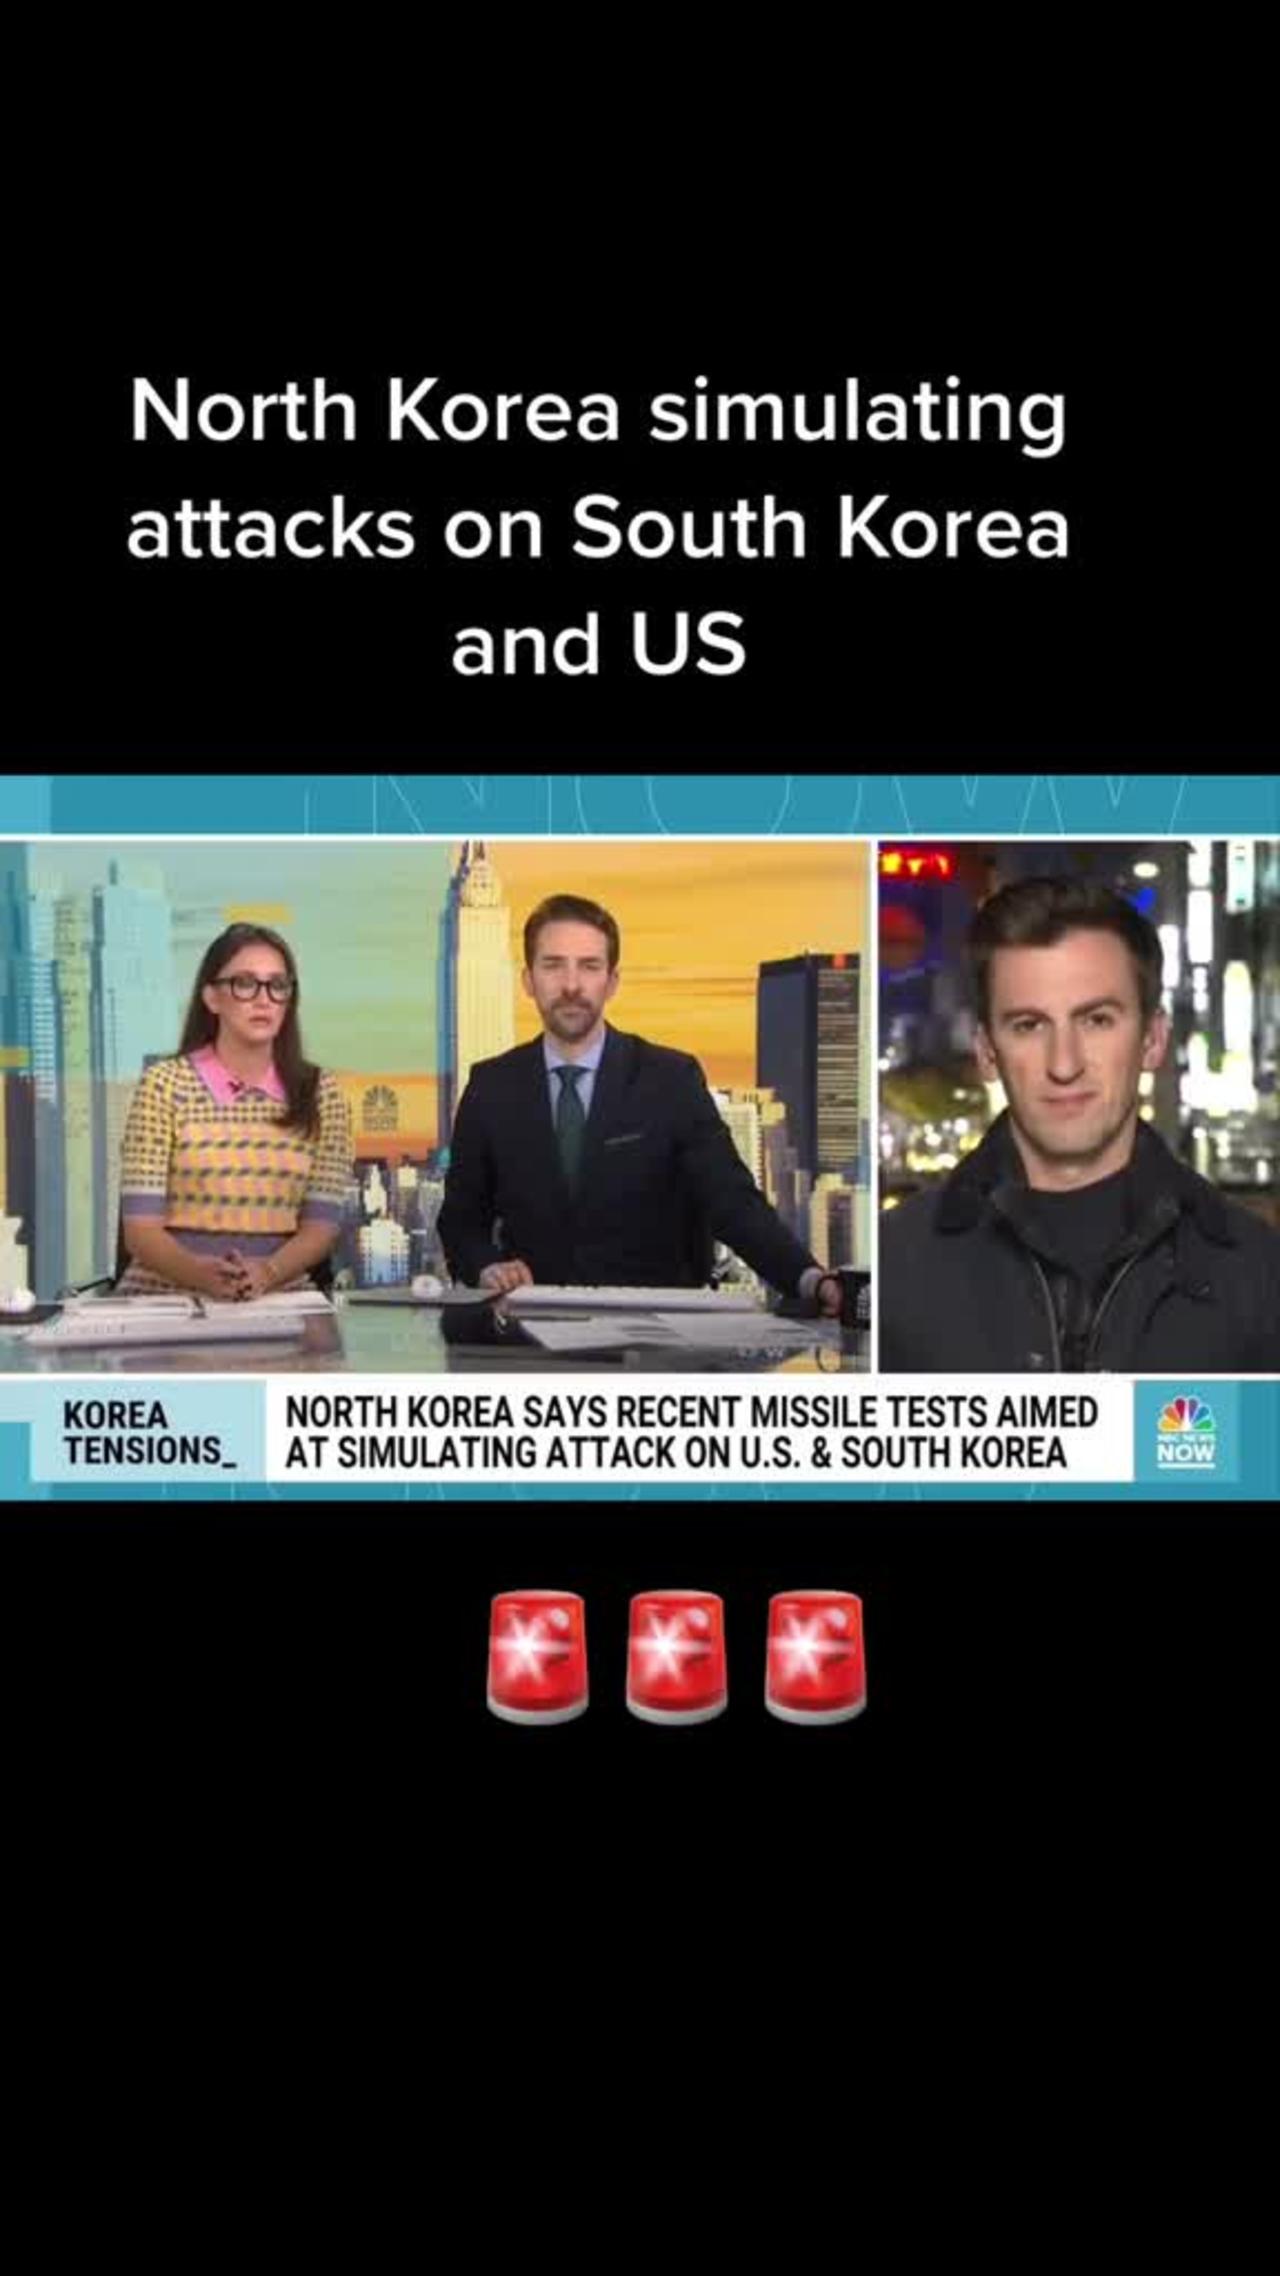 North Korea simulating attacks on South Korea and US